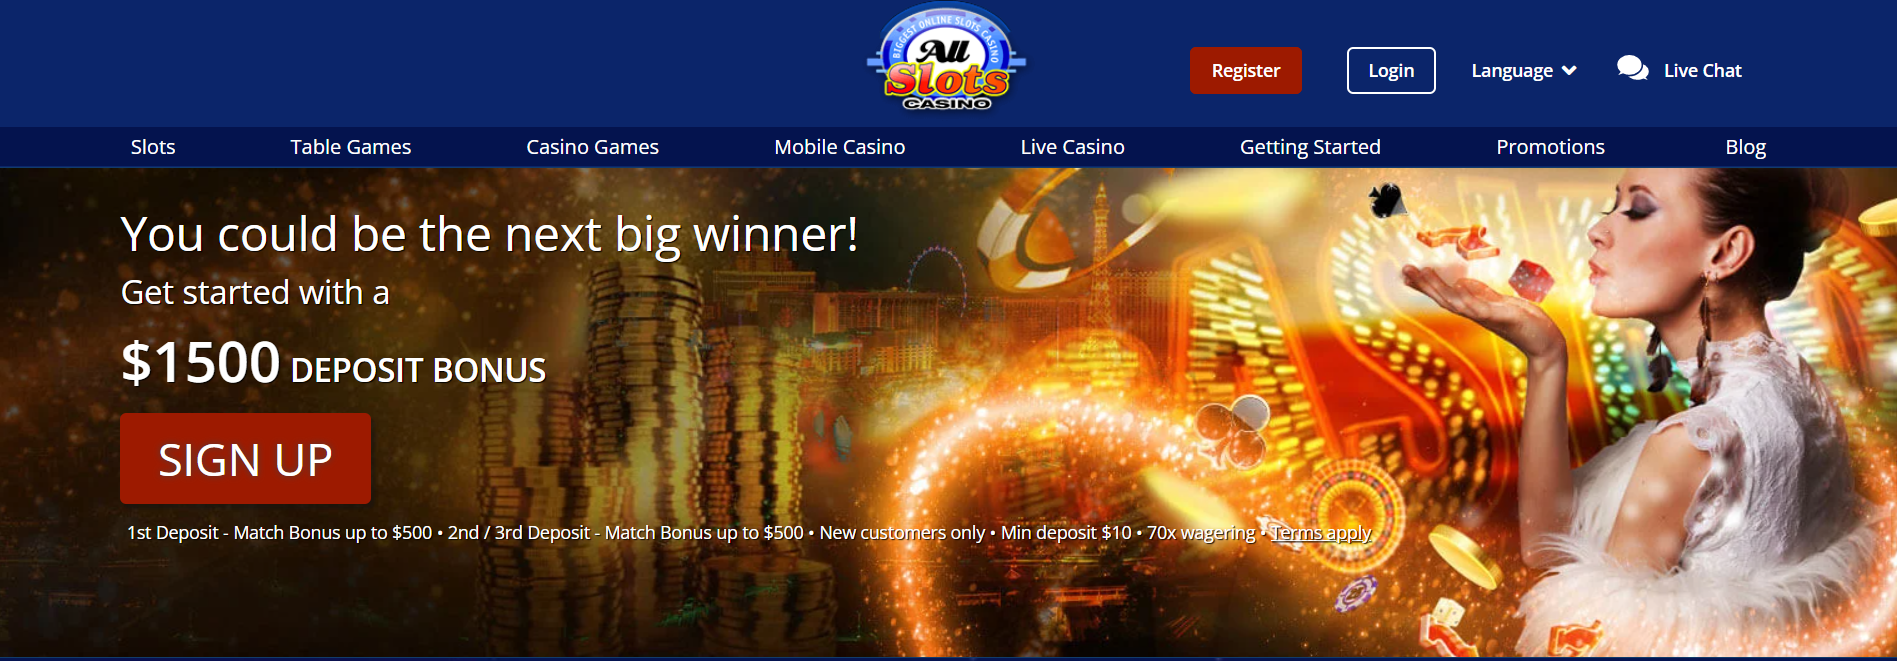 All slots casino main page